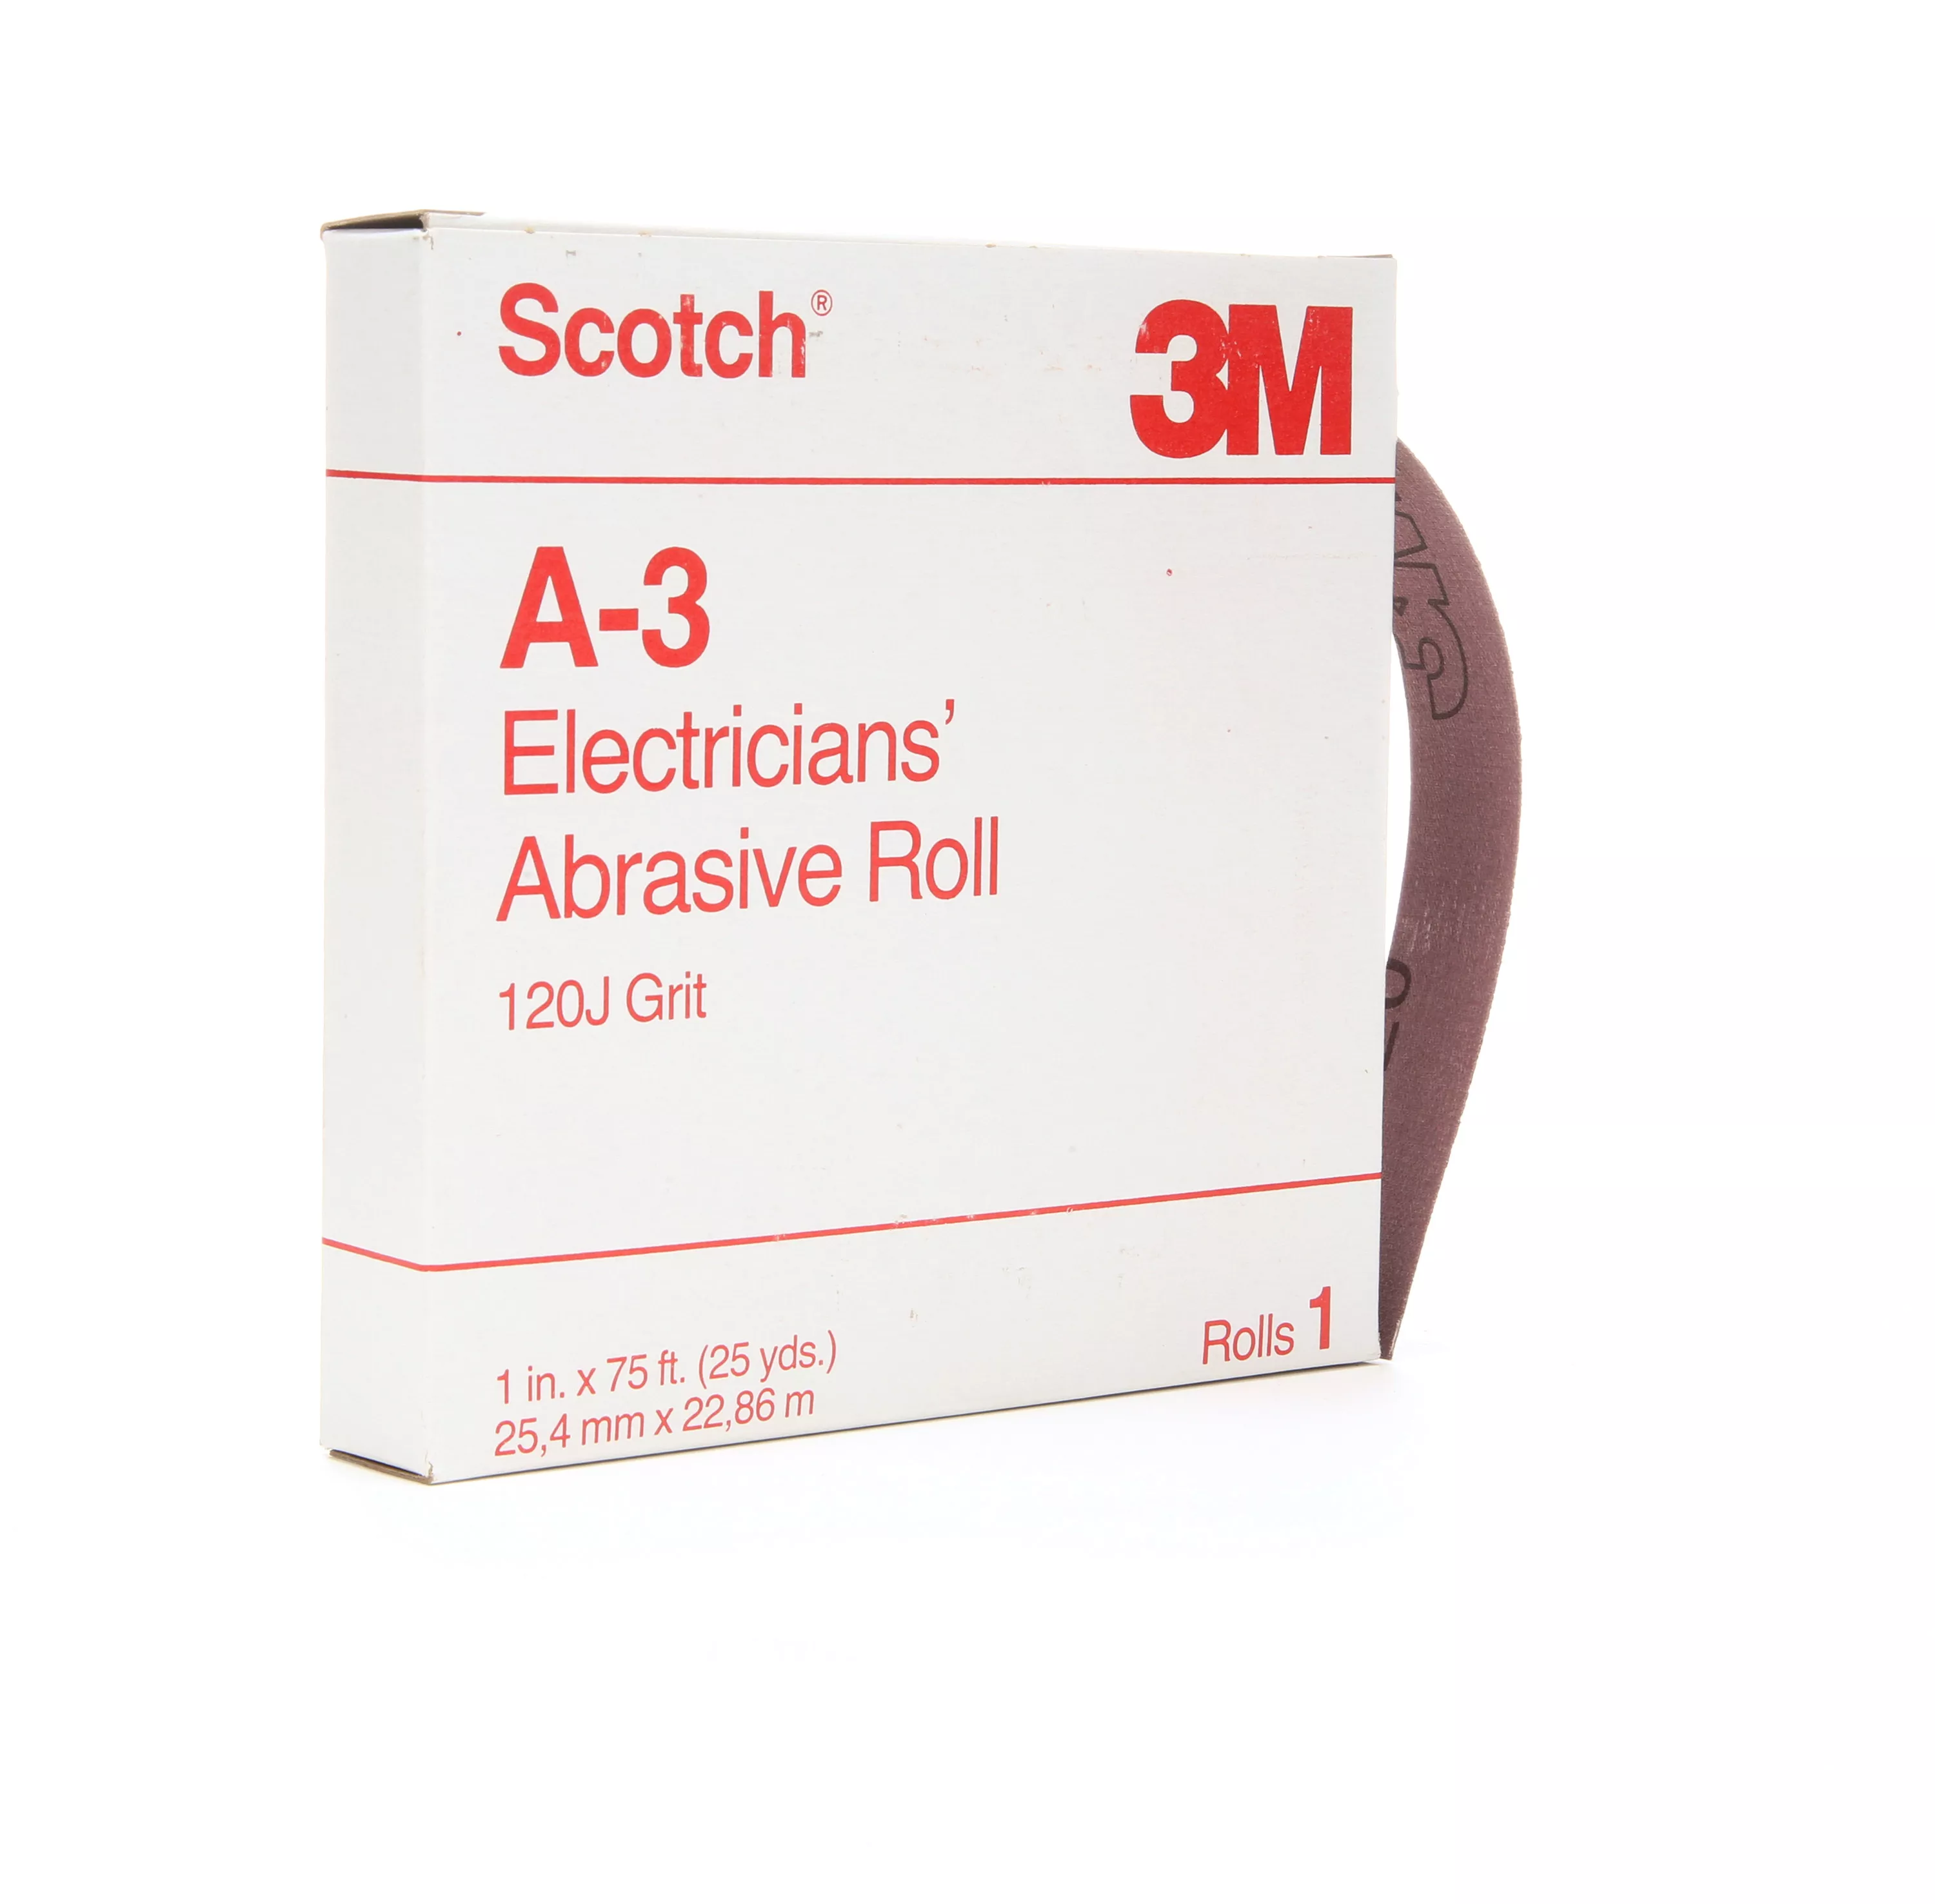 Scotch® Electrician's Abrasive Roll A-3, 1 in x 25 yd, 120 J-weight, 10
ea/Case